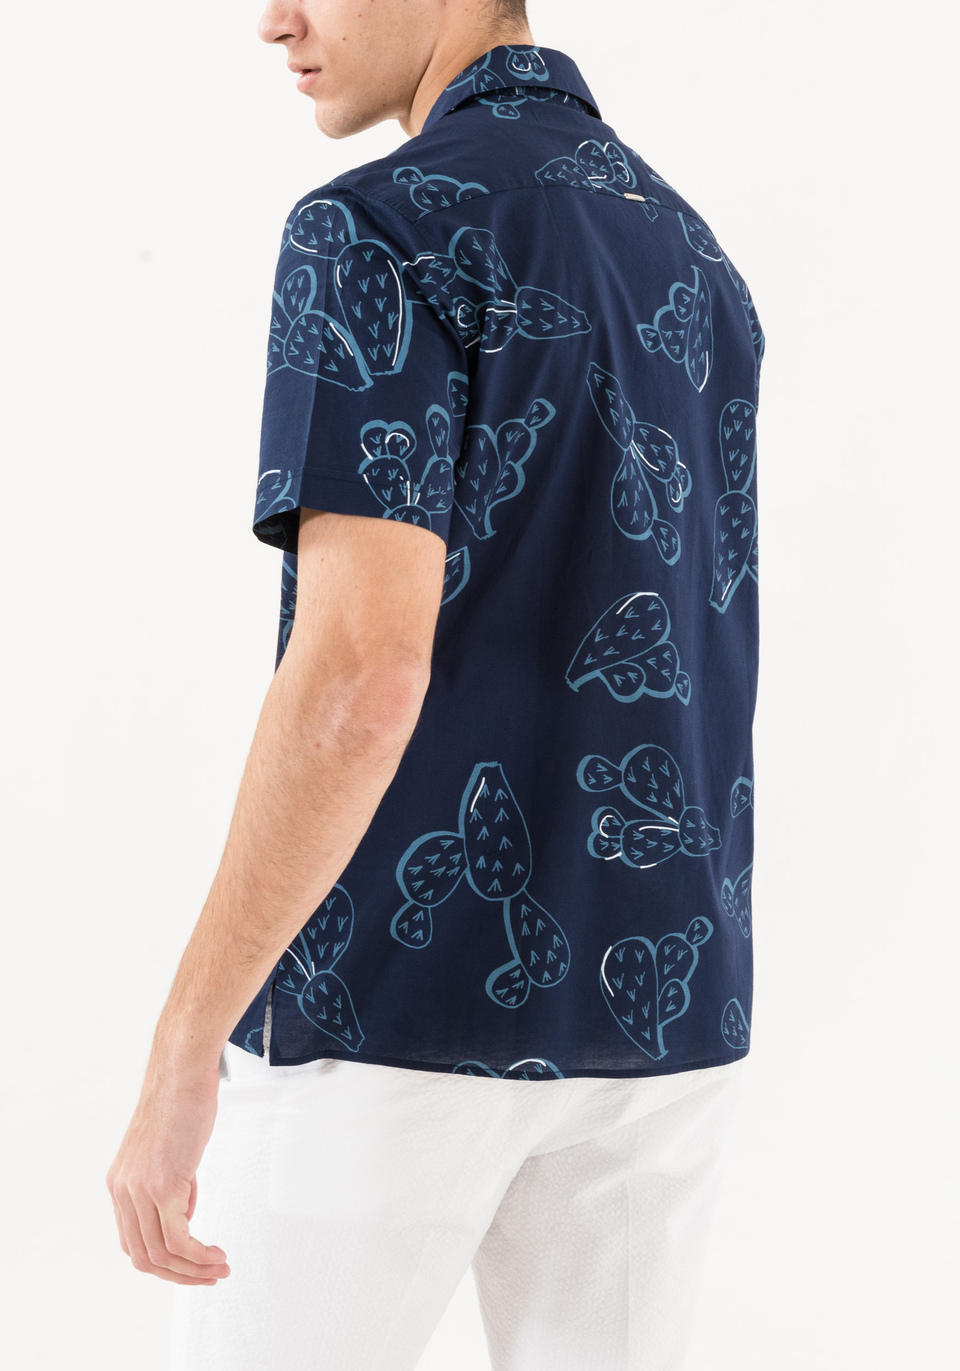 Oversize-Hemd mit Kaktus-Muster - Antony Morato Online Shop